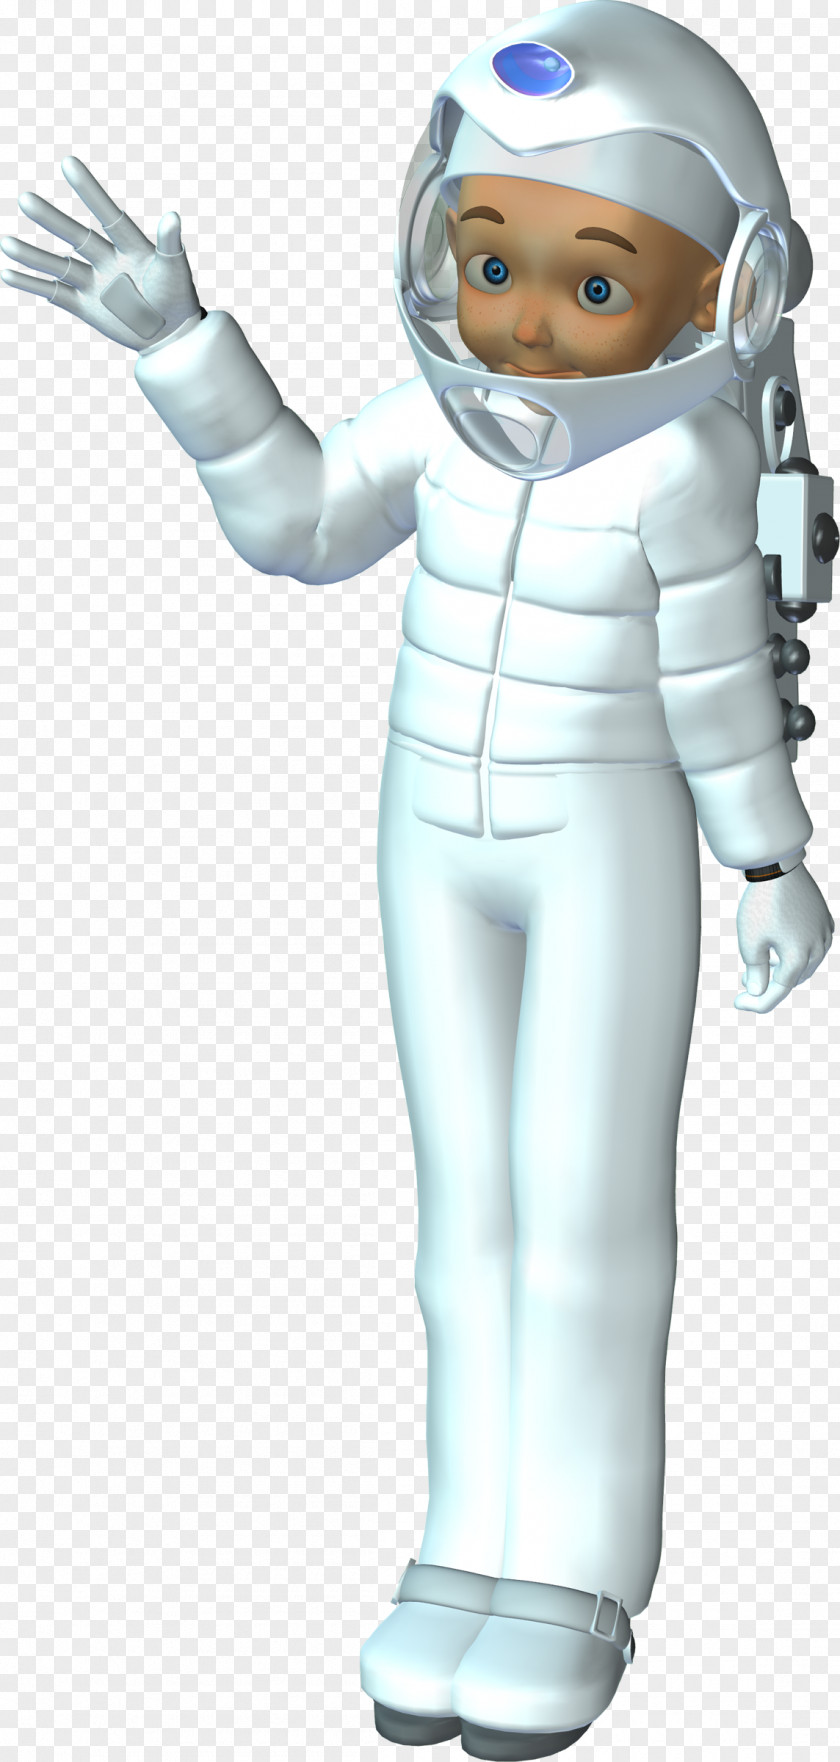 Astronaut Finger Figurine Mascot Character Cartoon PNG